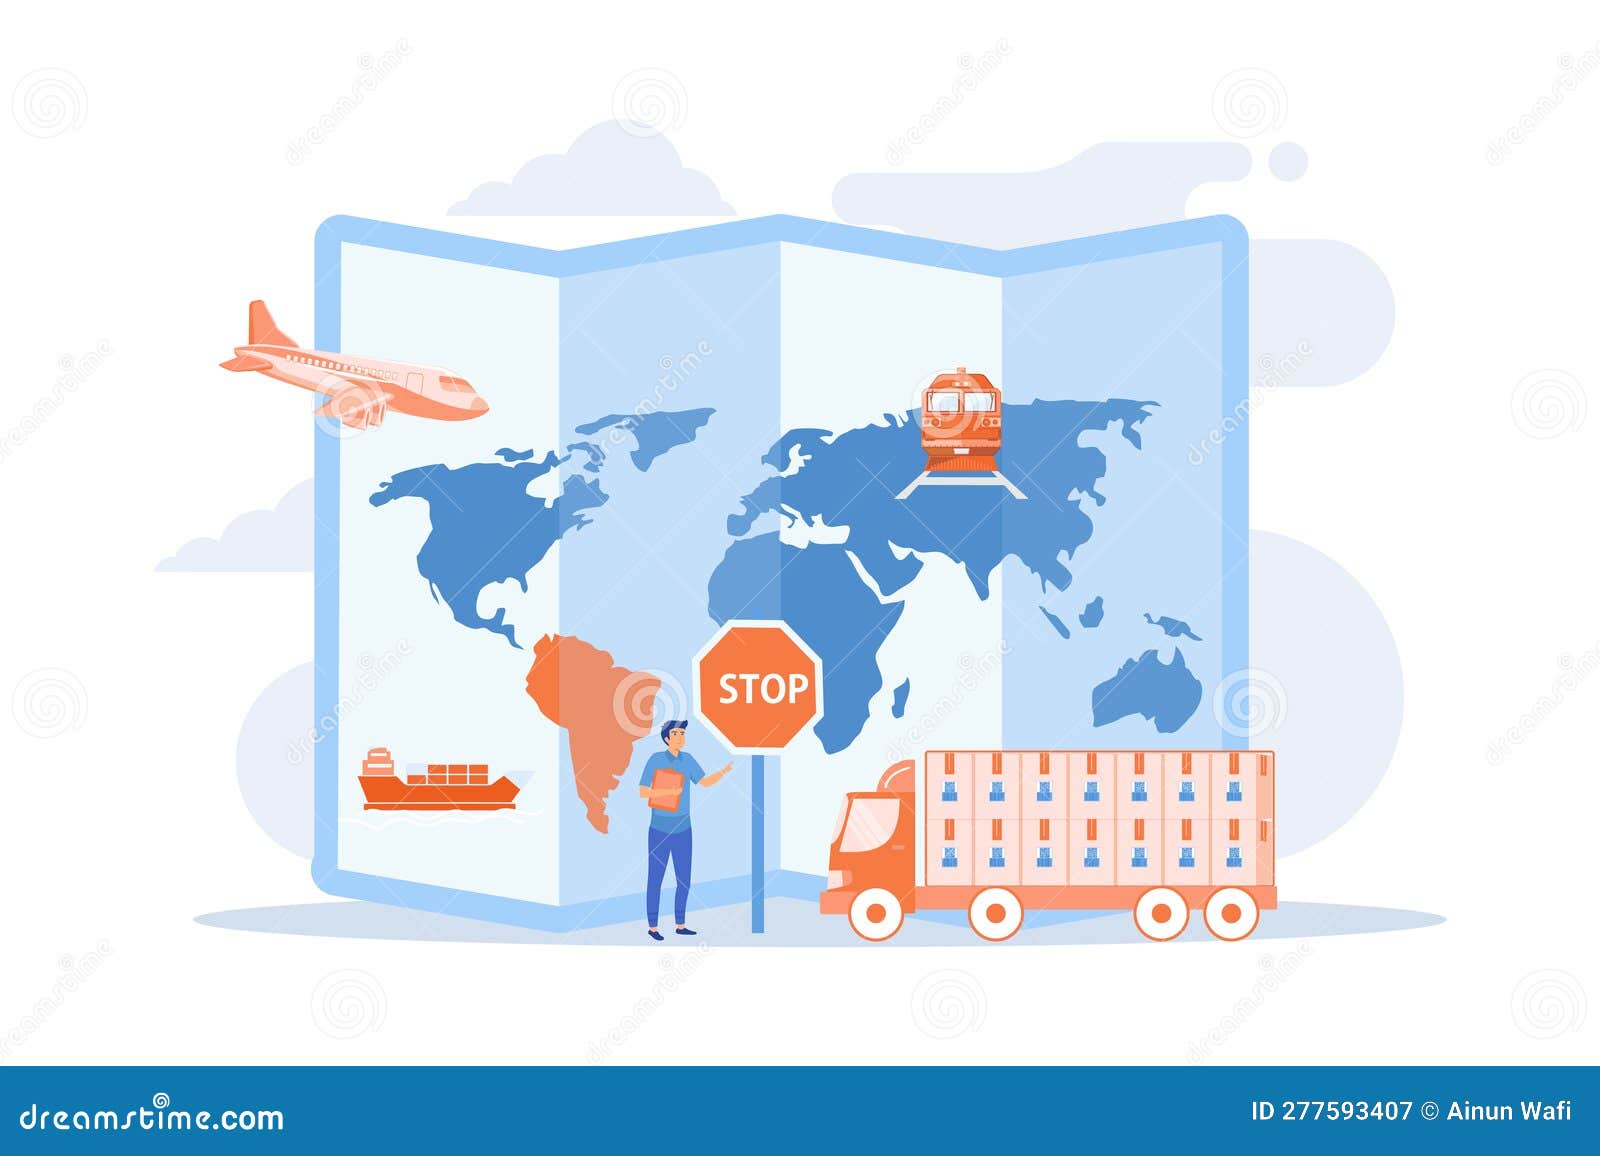 banned products transportation, smuggling. embargo regulation, sanctions goods, limited importation exportation of goods concept